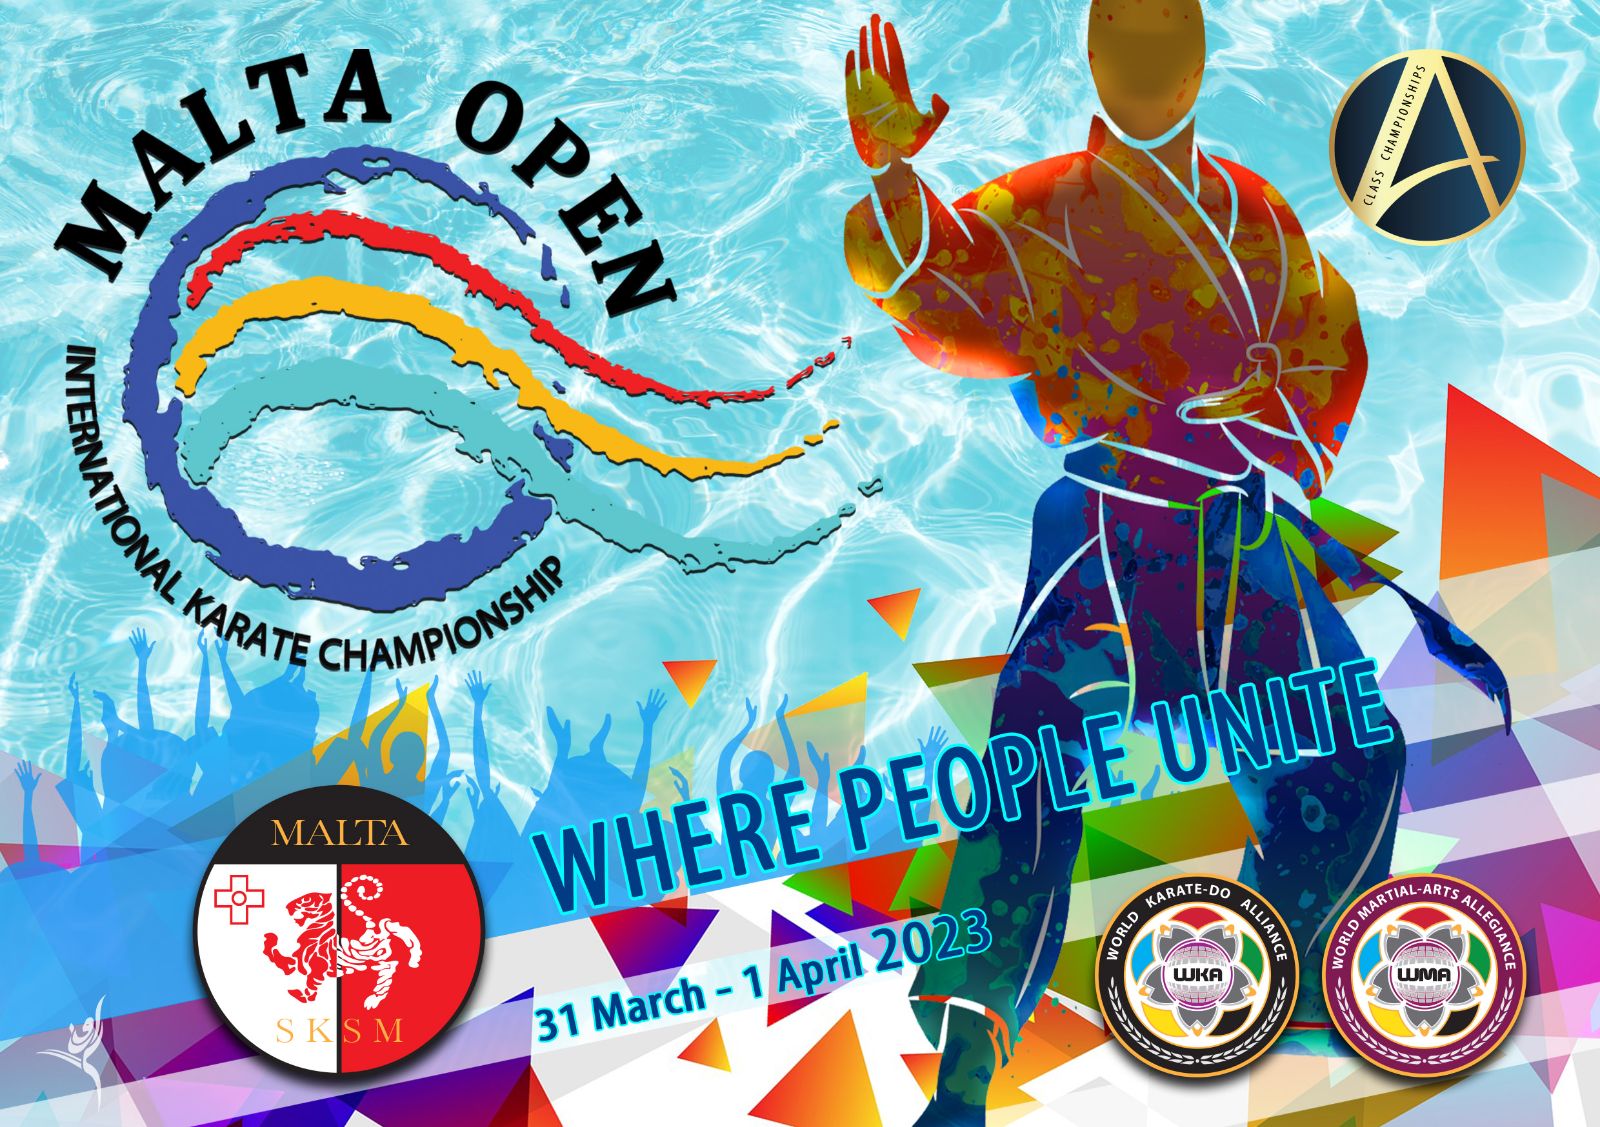 Malta Open 2023 - Ta Qali (Malta).jpg